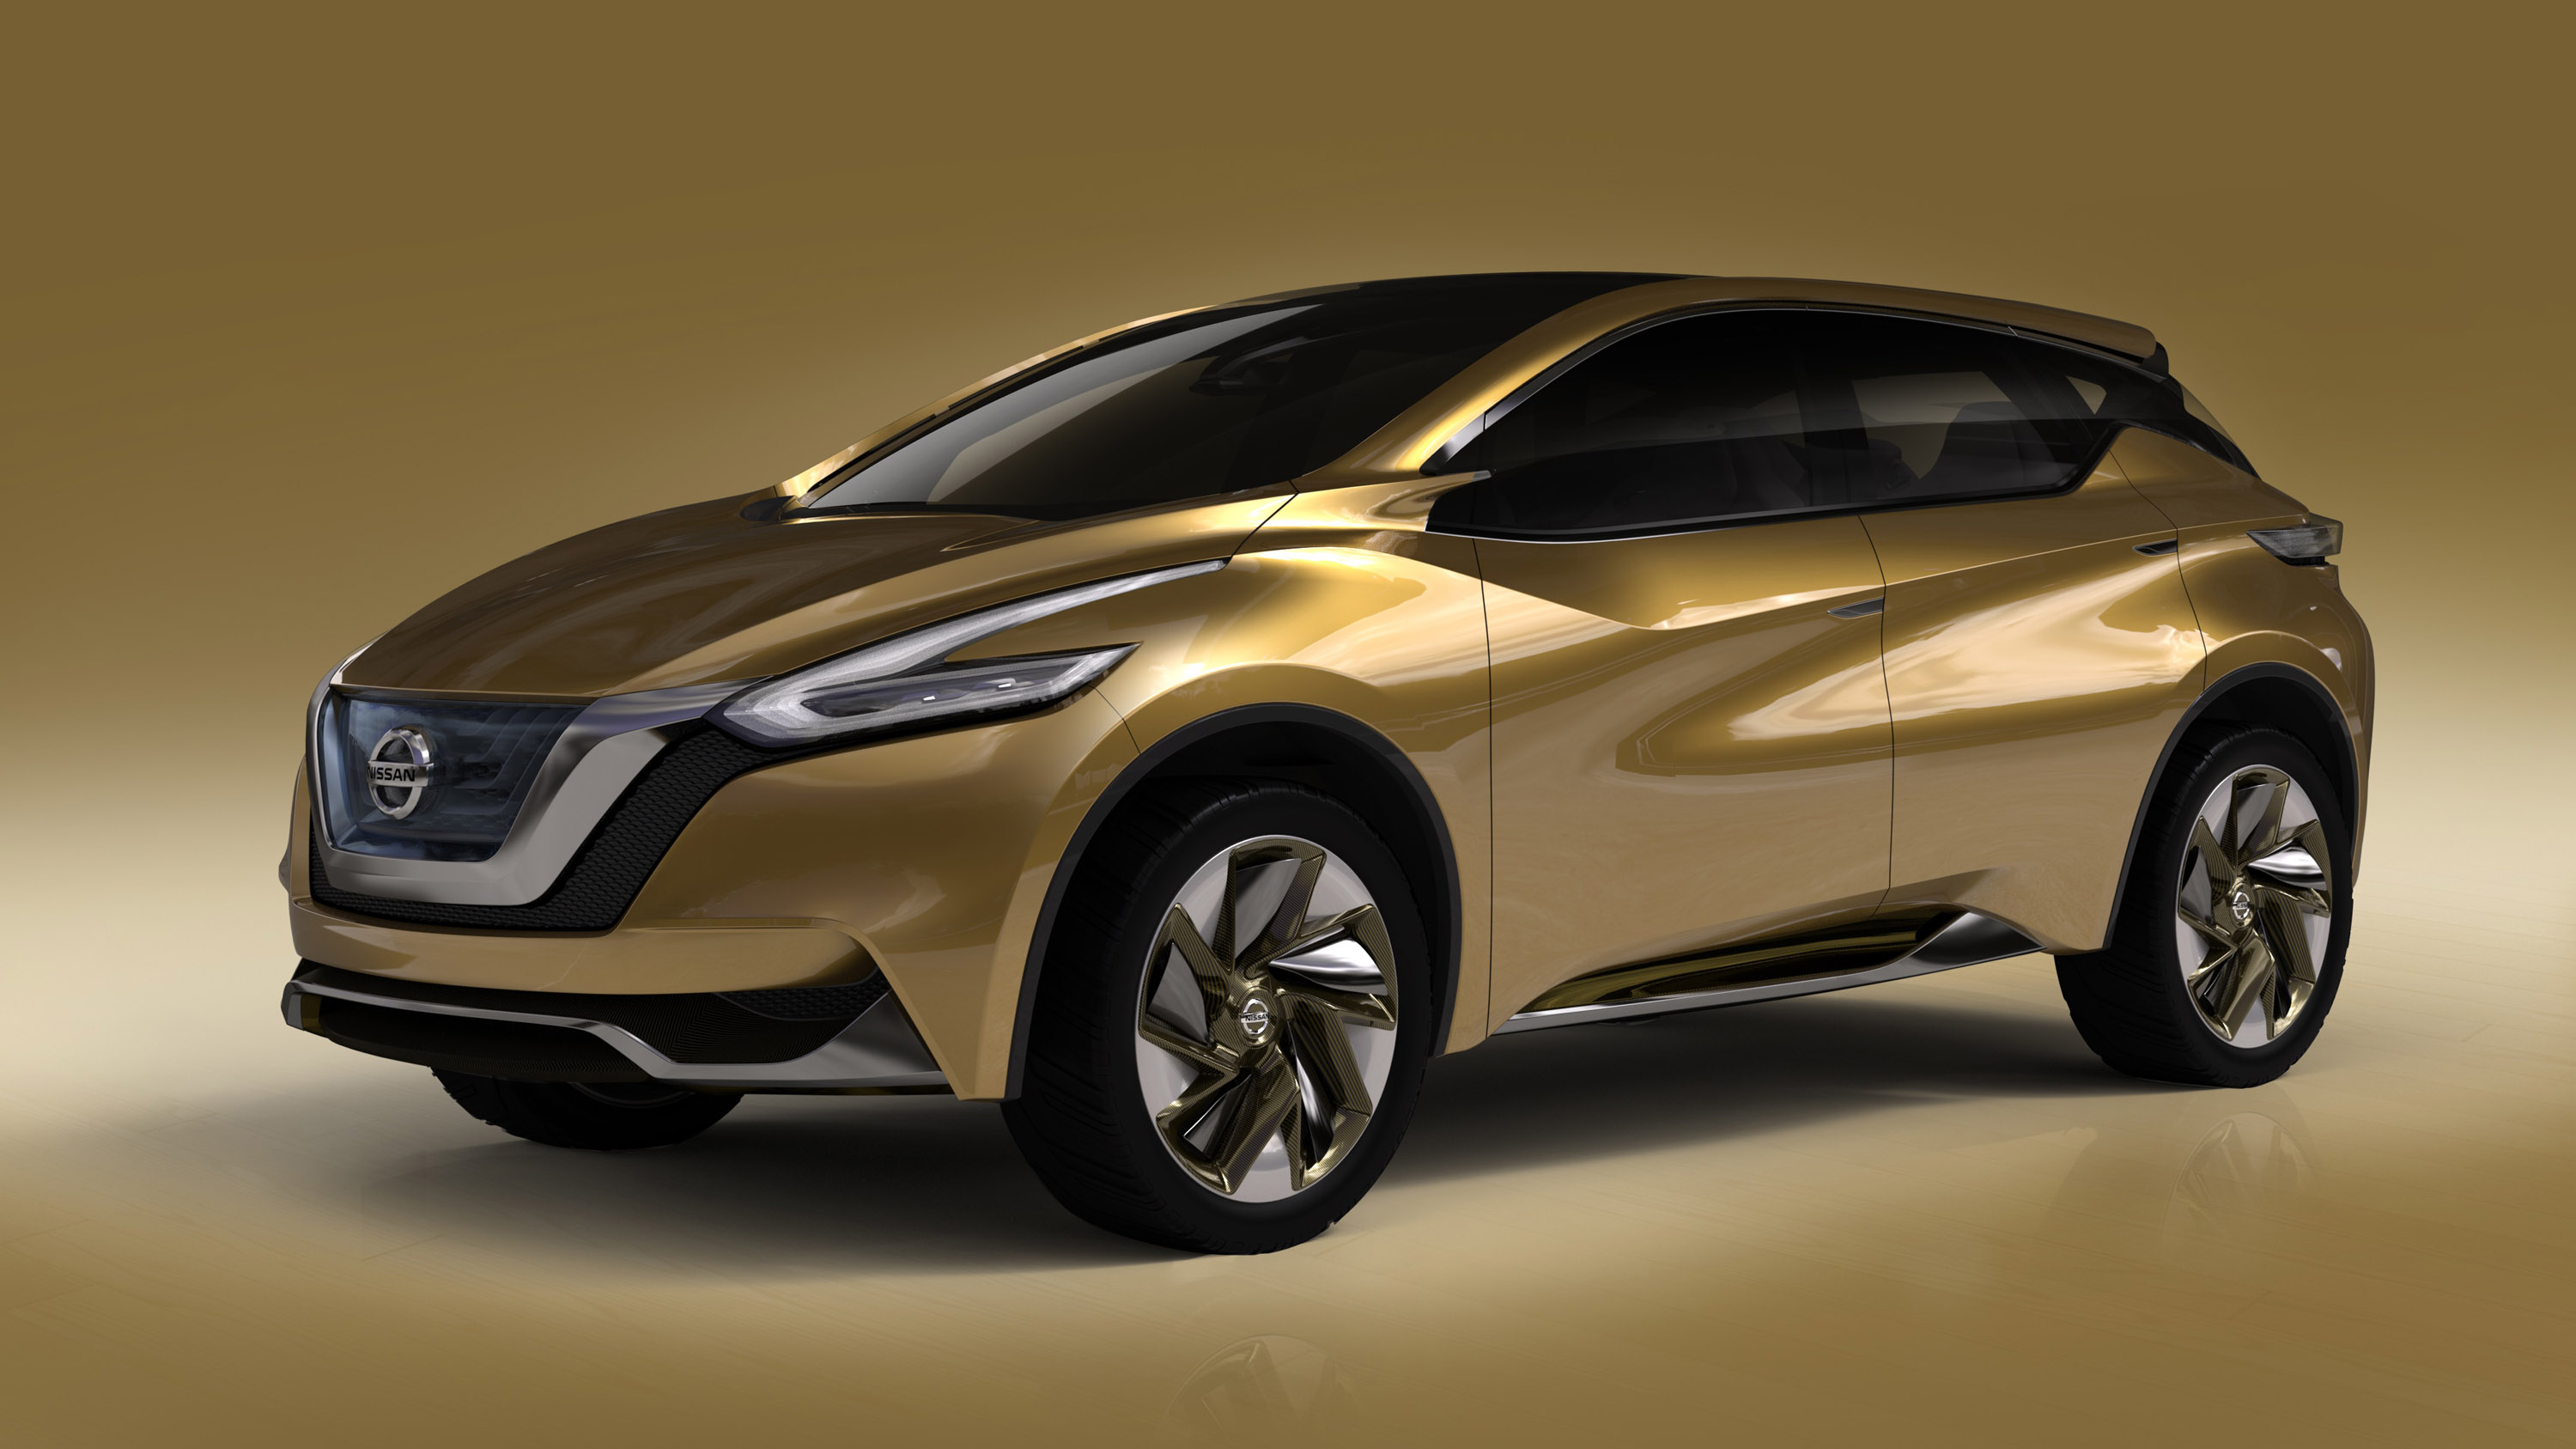 2013, Nissan, Resonance, Concept, Suv Wallpaper